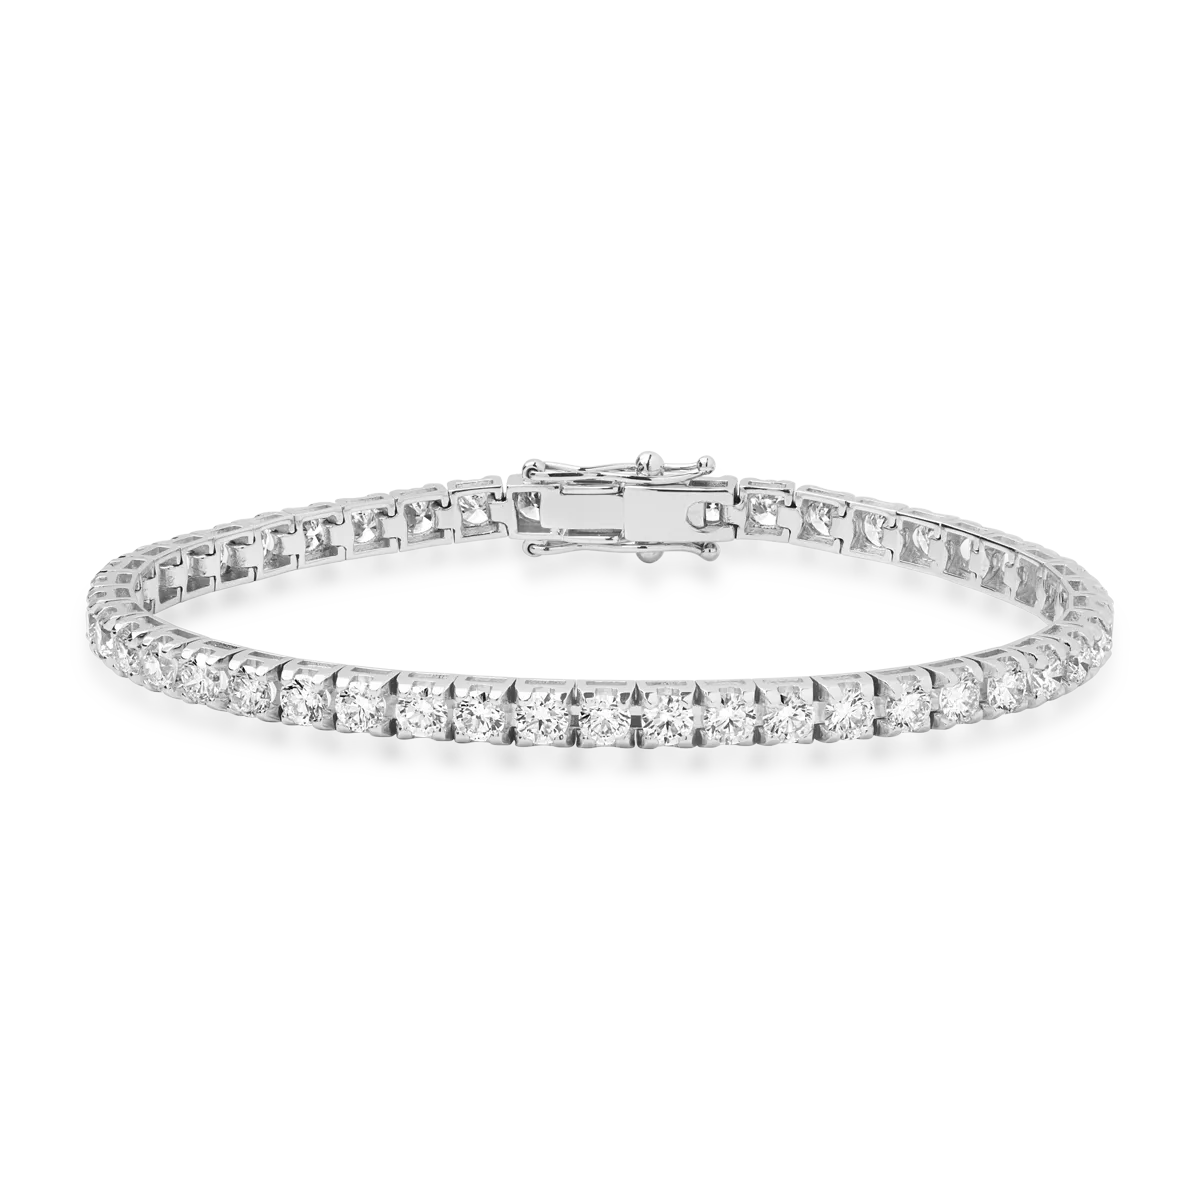 18K white gold tennis bracelet with 5.05ct diamonds